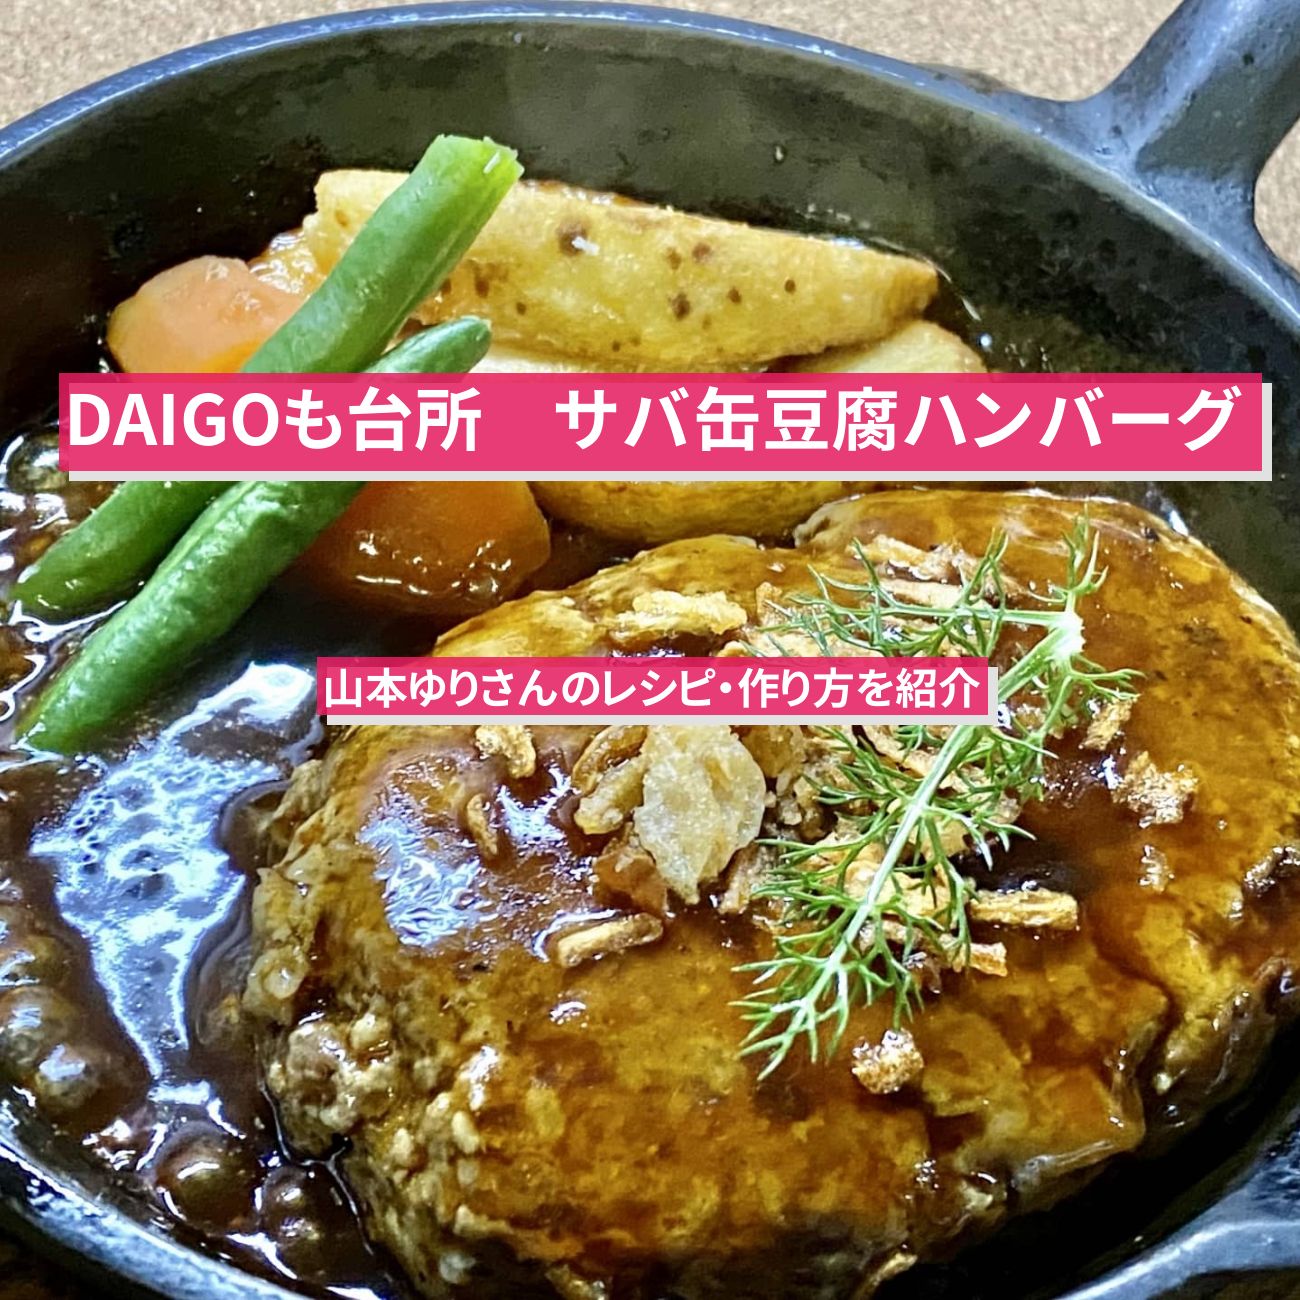 【DAIGOも台所】『サバ缶豆腐ハンバーグ』山本ゆりさんのレシピ・作り方を紹介〔ダイゴも台所〕